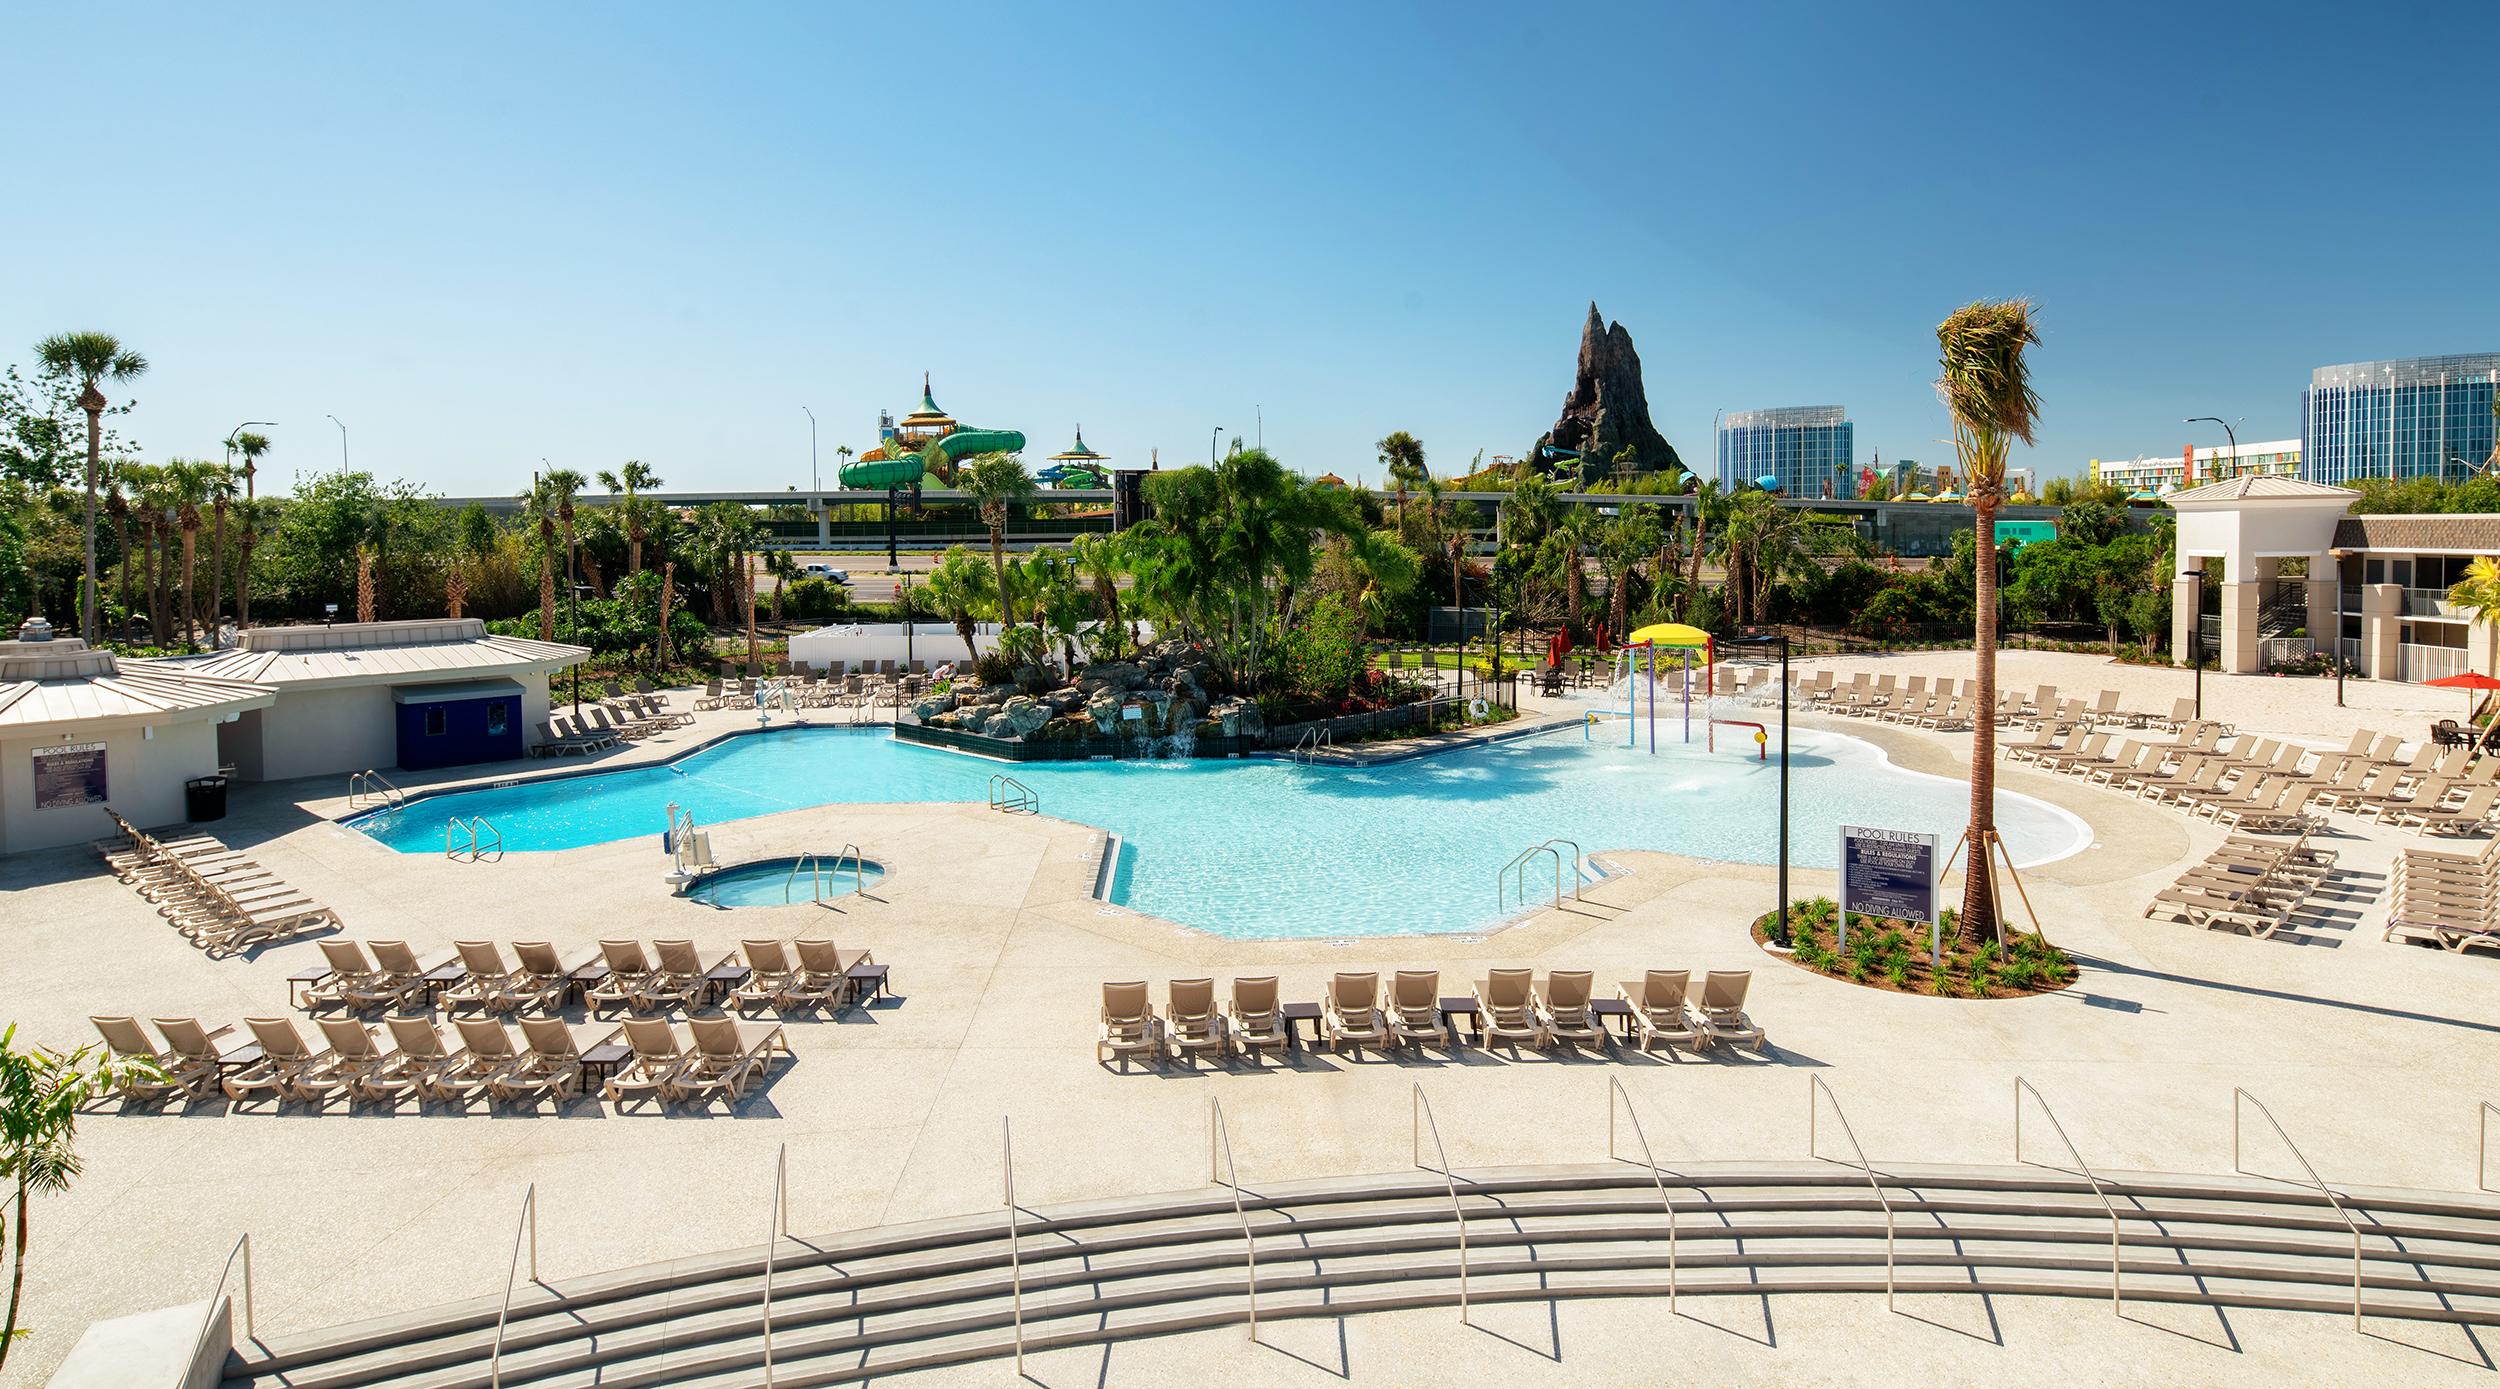 Avanti Palms Resort And Conference Center Orlando Facilities photo